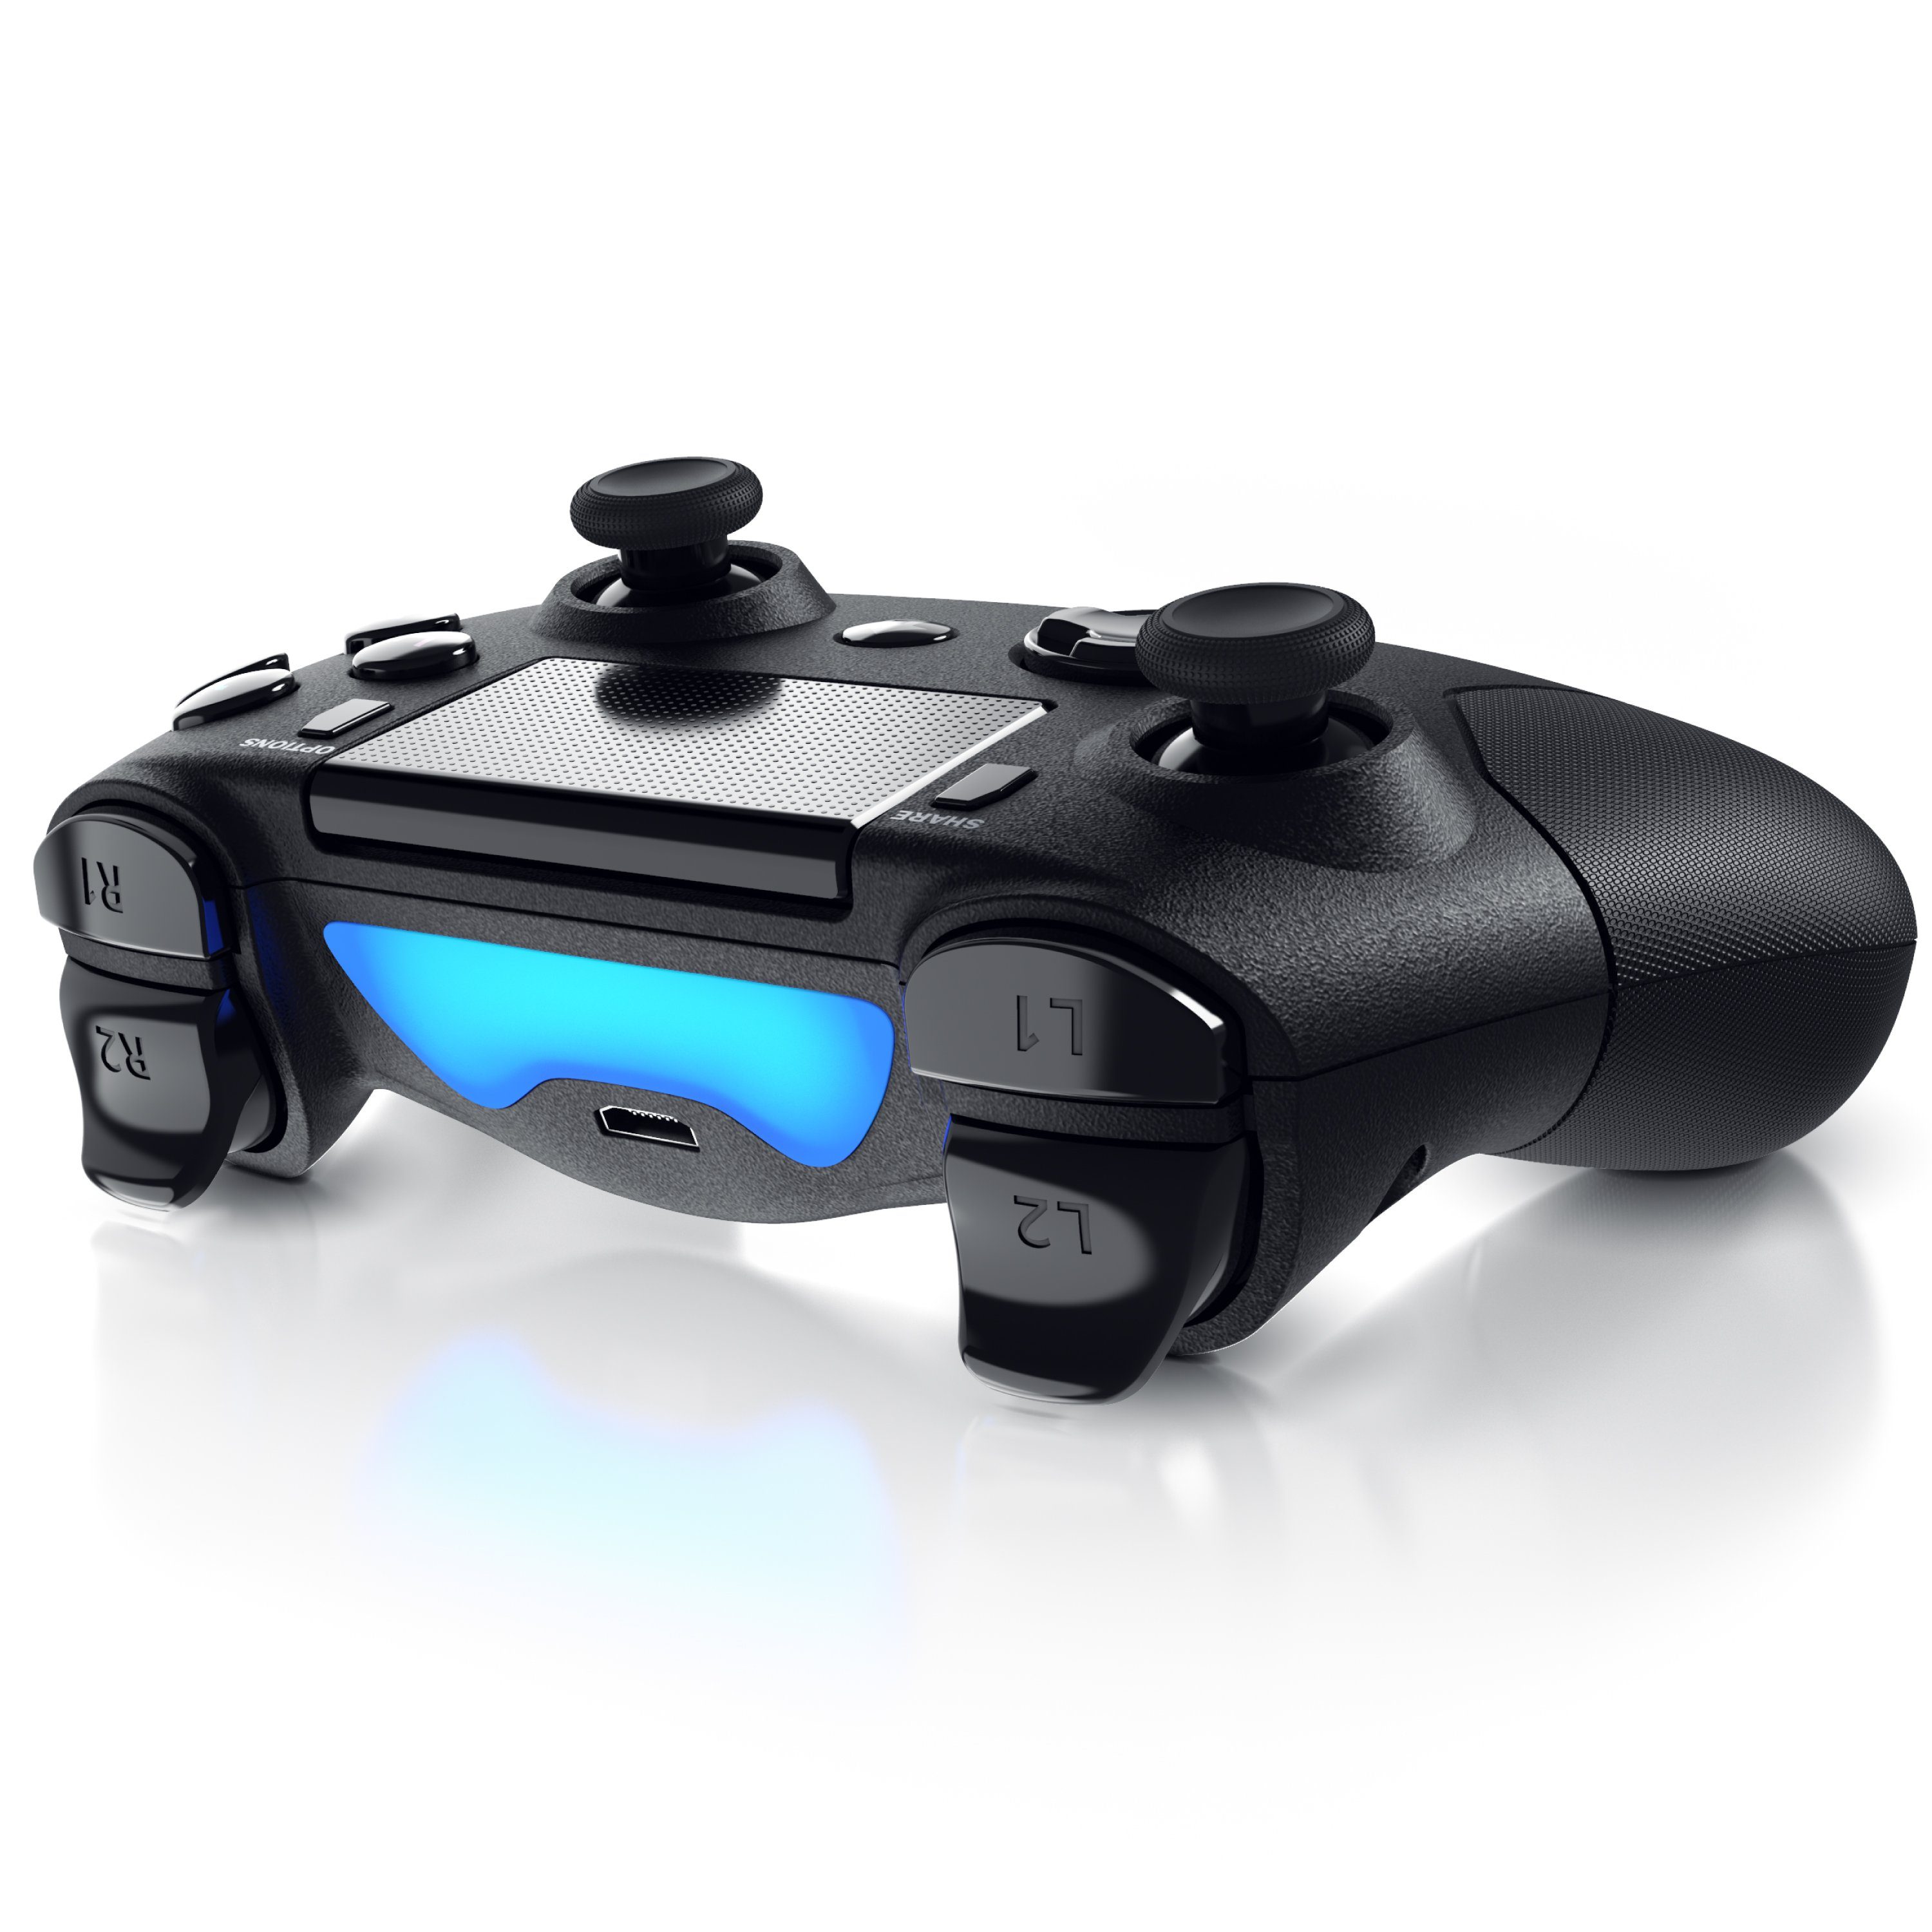 CSL PS4, Gyrosensor) Dual PlayStation für Touchpad, Bluetooth 3,5mm, St., Gamepad 4-Controller Vibration, (1